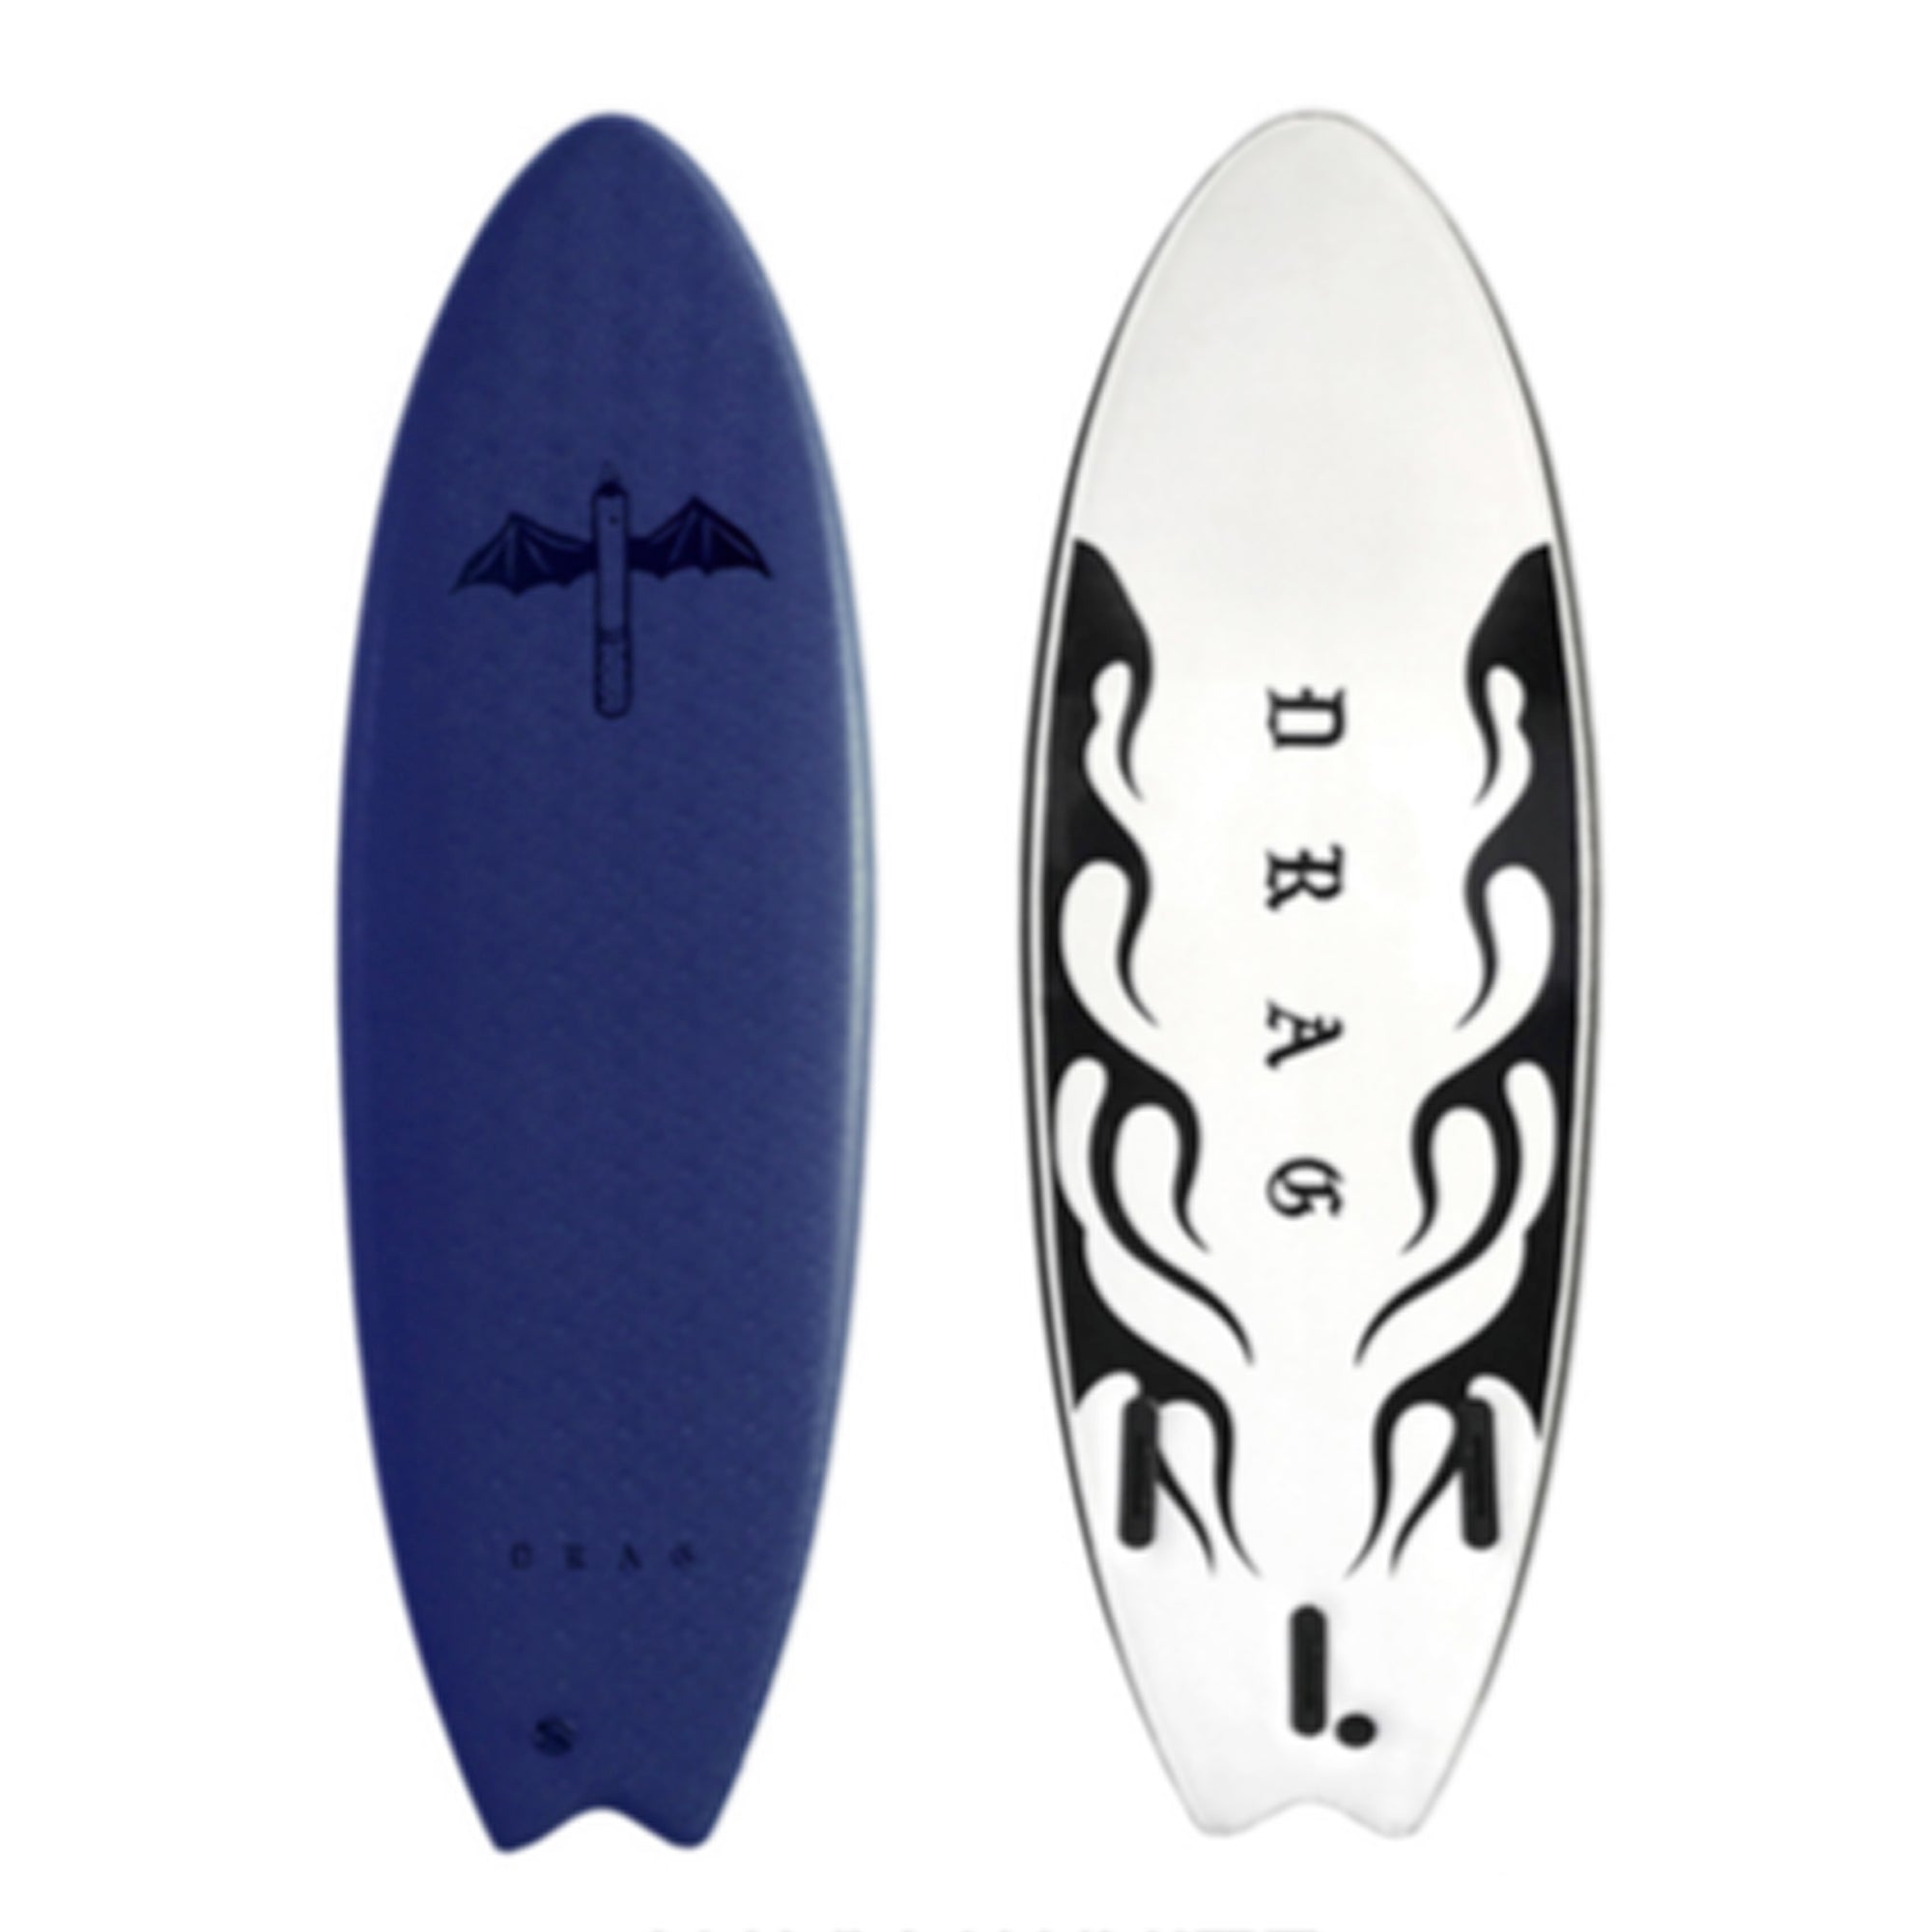 Drag Dart 5'6 Thruster Soft Surfboard